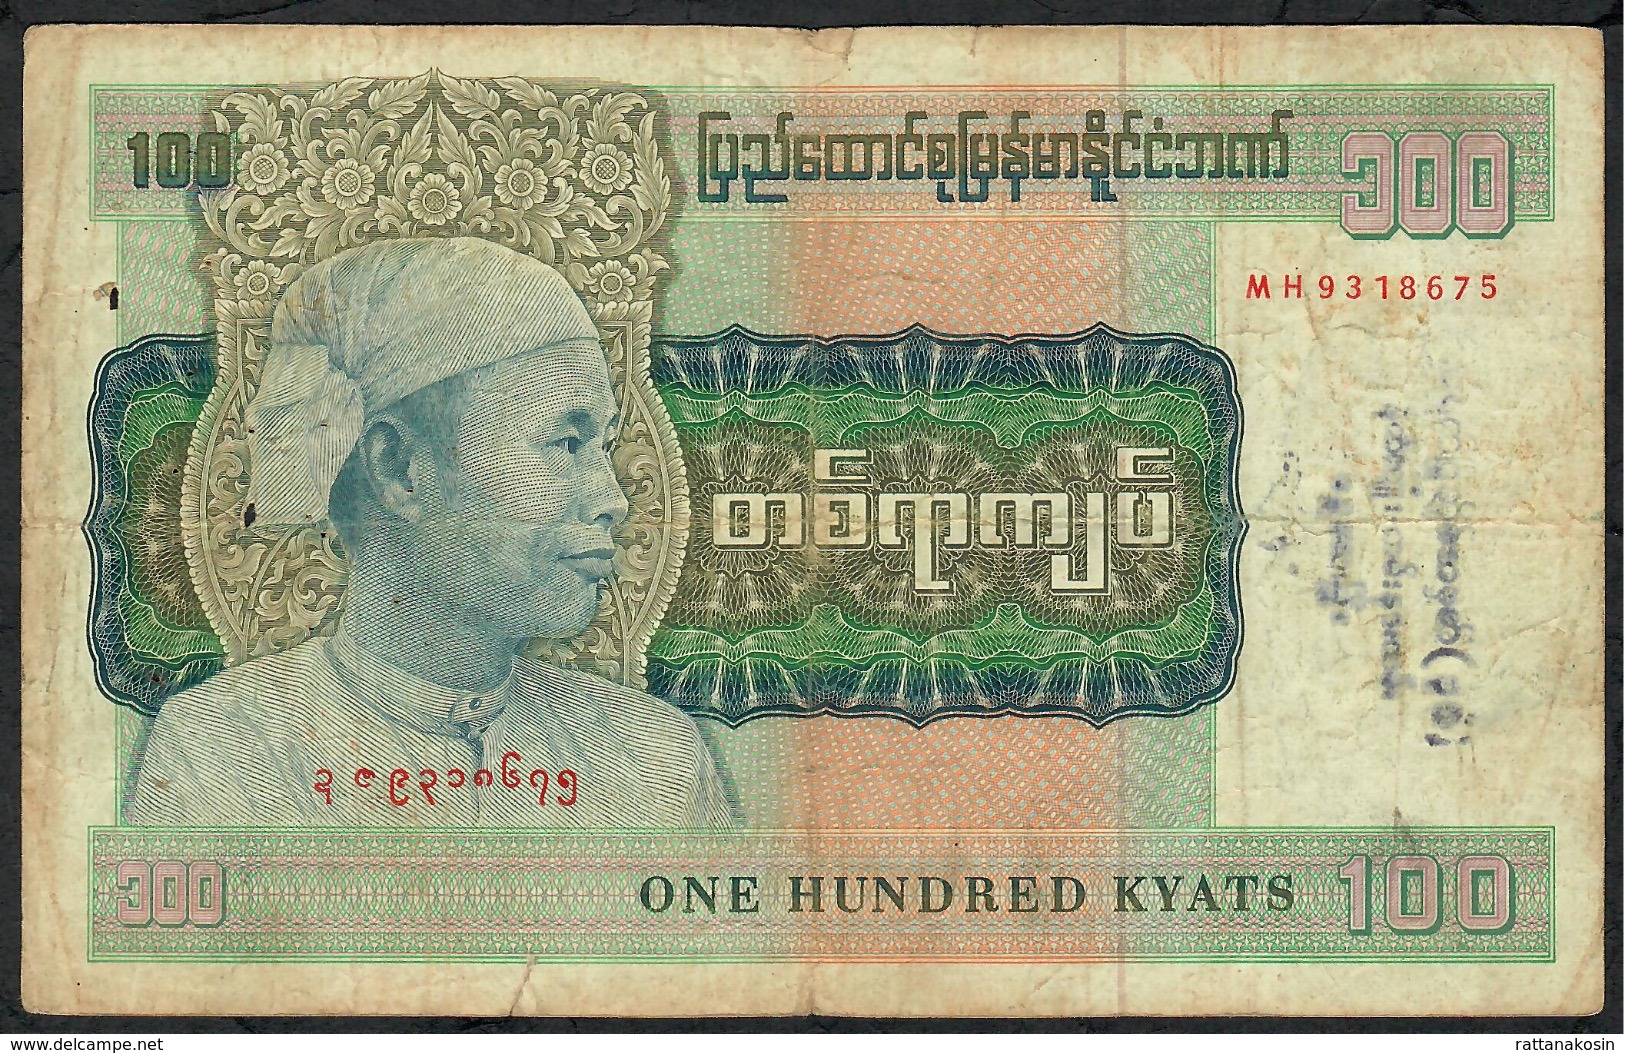 MYANMAR P61 100 KYATS 1976 #MH  FINE P.h. - Myanmar